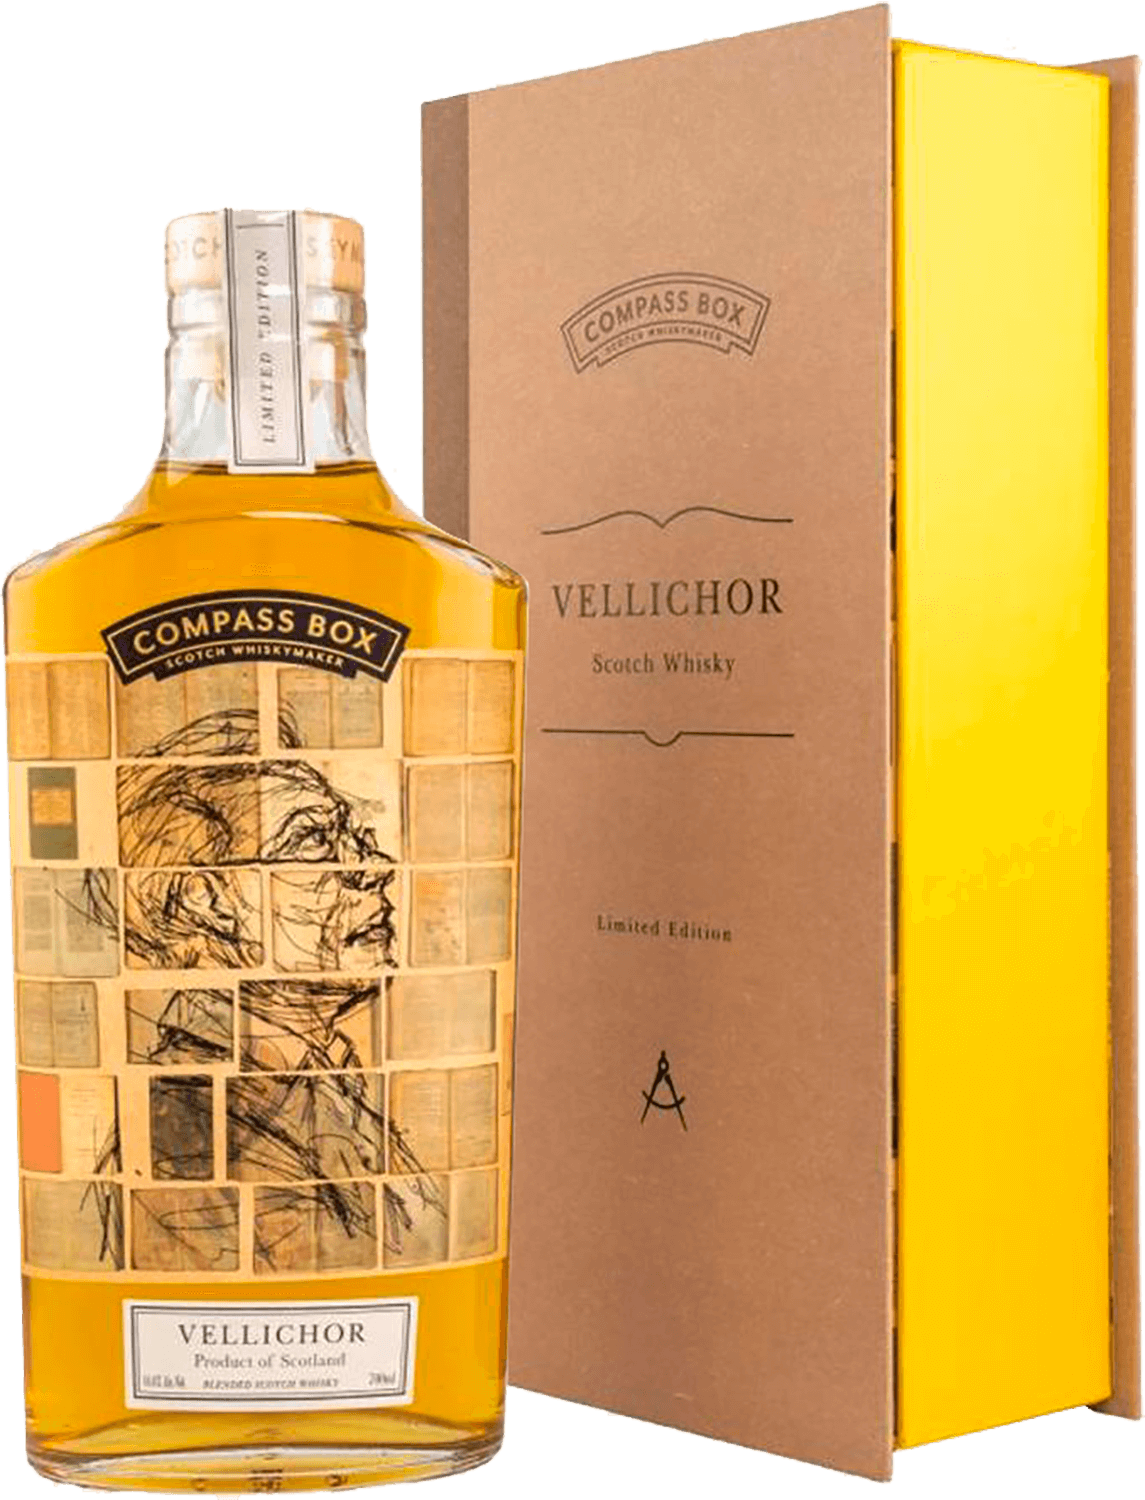 Compass Box Vellichor Blended Scotch Whisky (gift box) compass box menagerie blended malt scotch whisky gift box